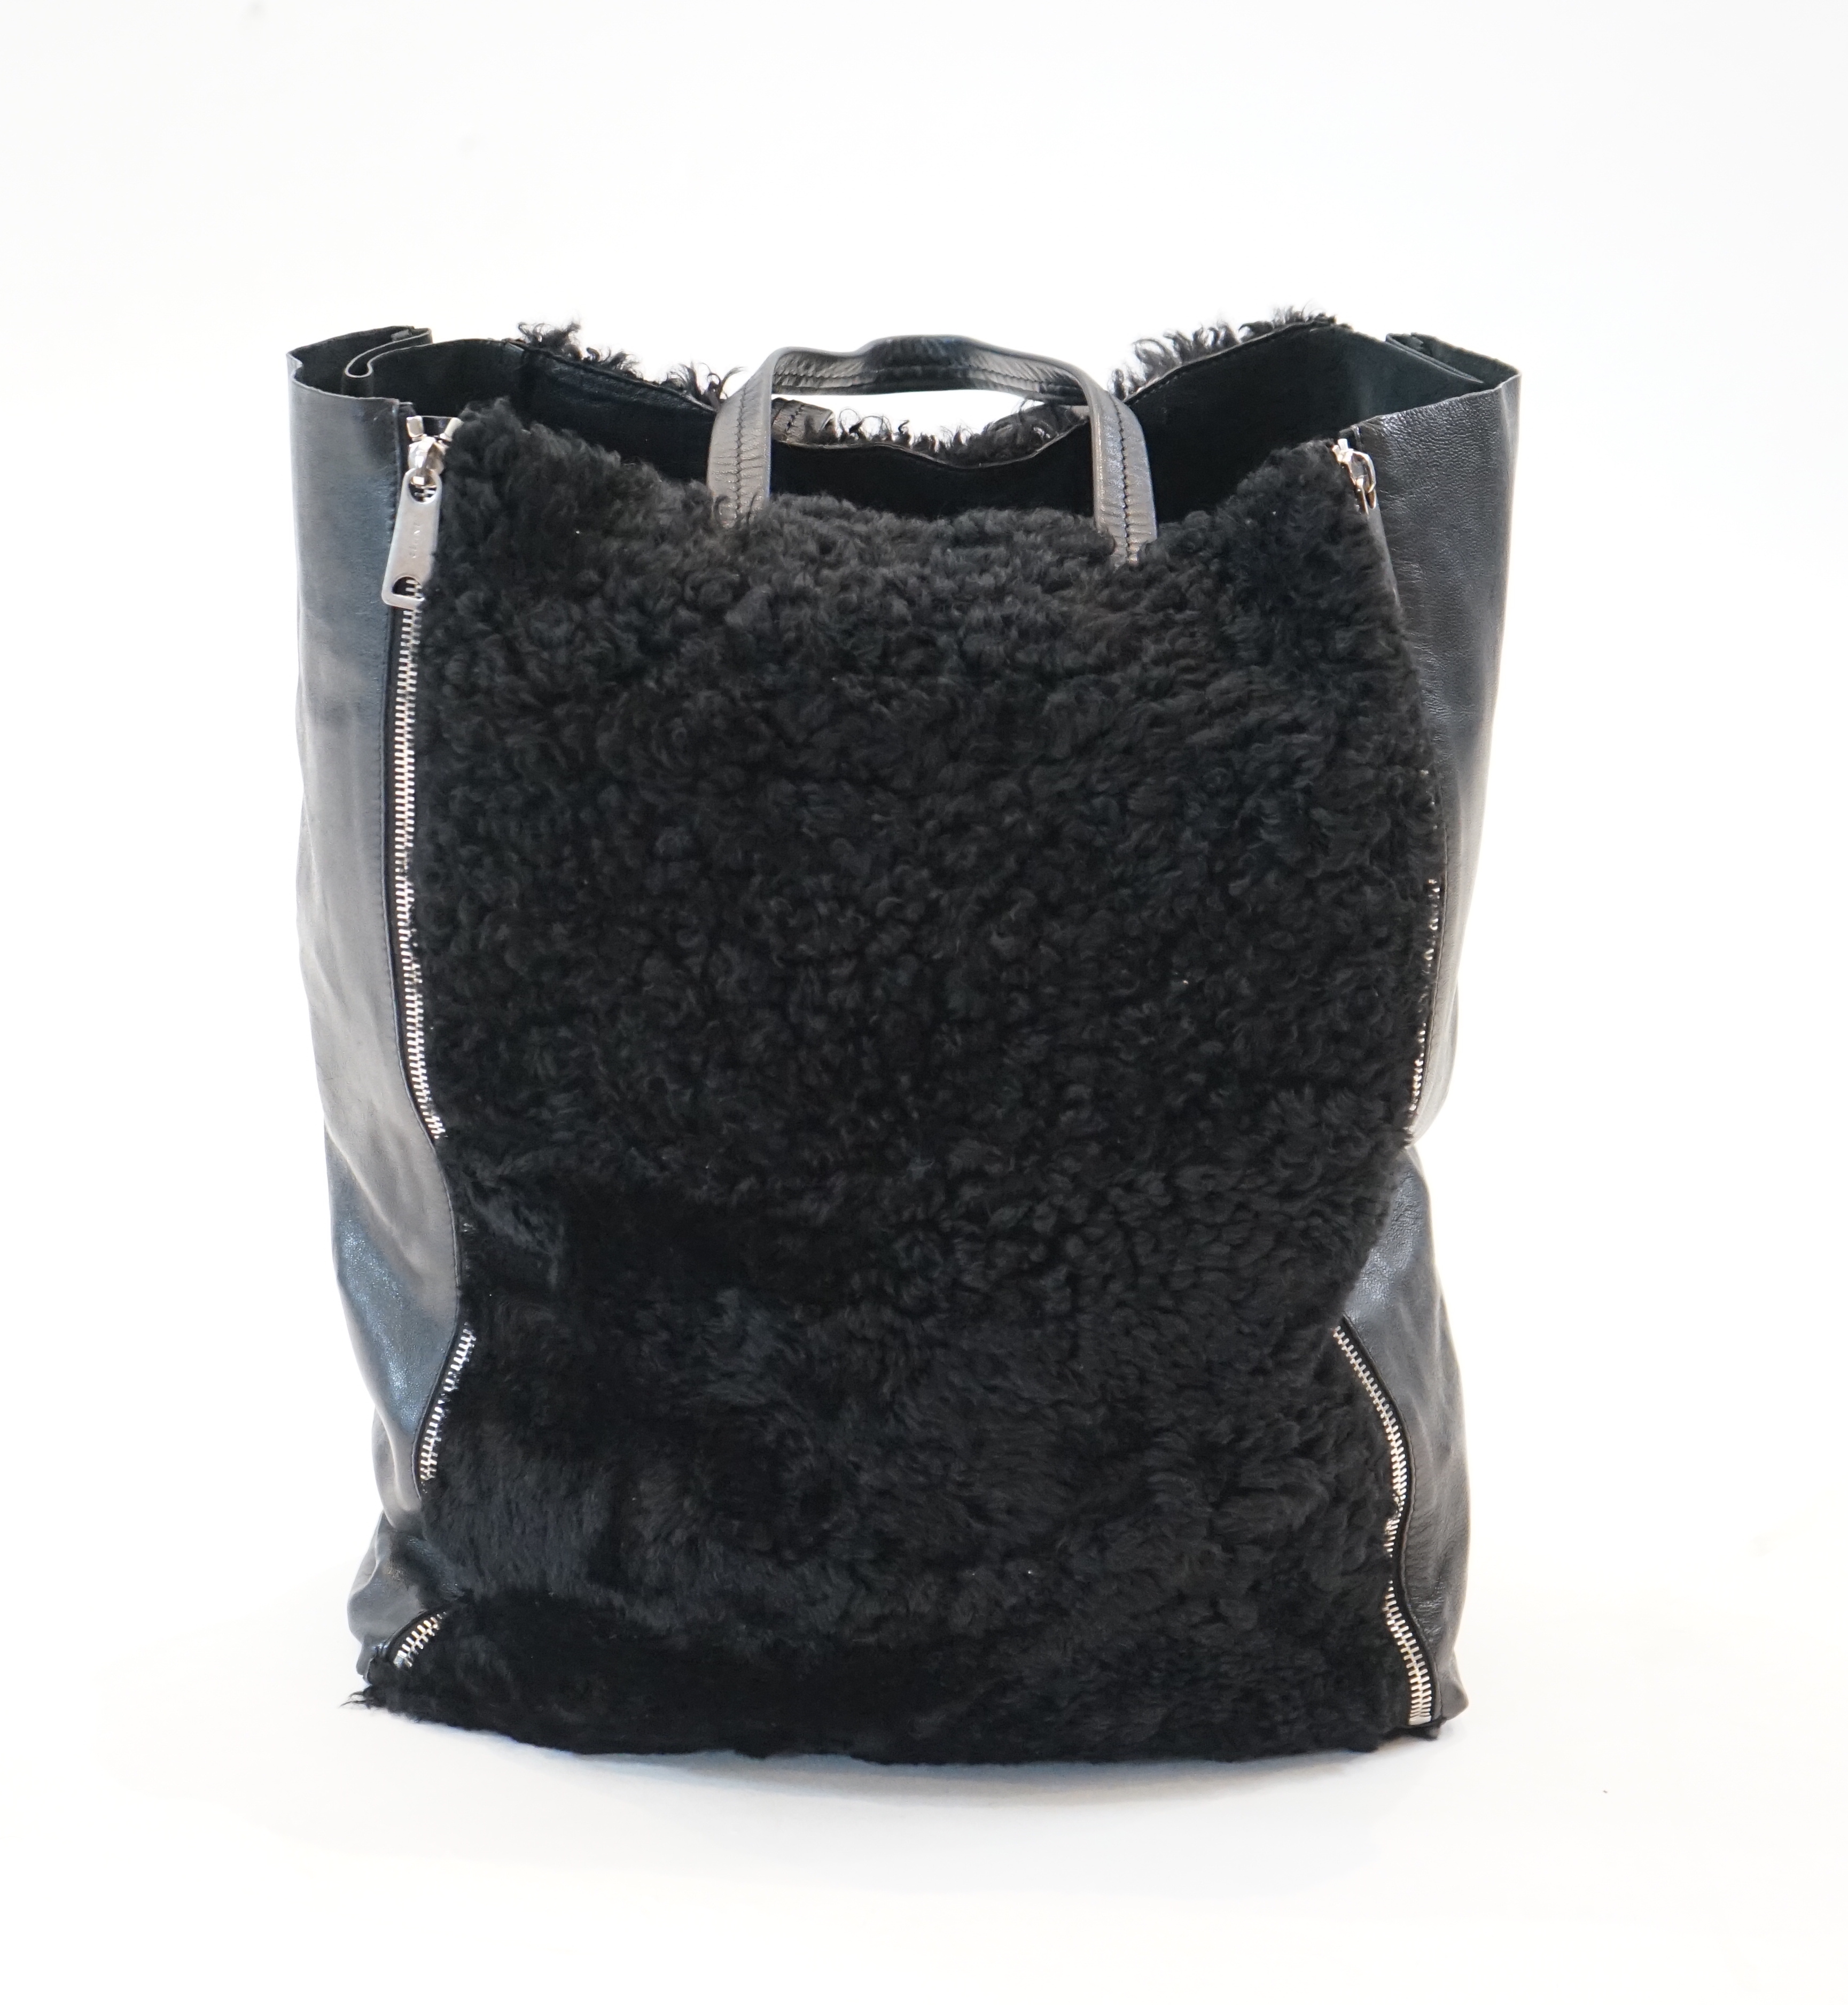 A Celine black shearling and black leather Vertical Gusset Cabas tote bag, Bag width 13cm, length 32cm, height 41cm